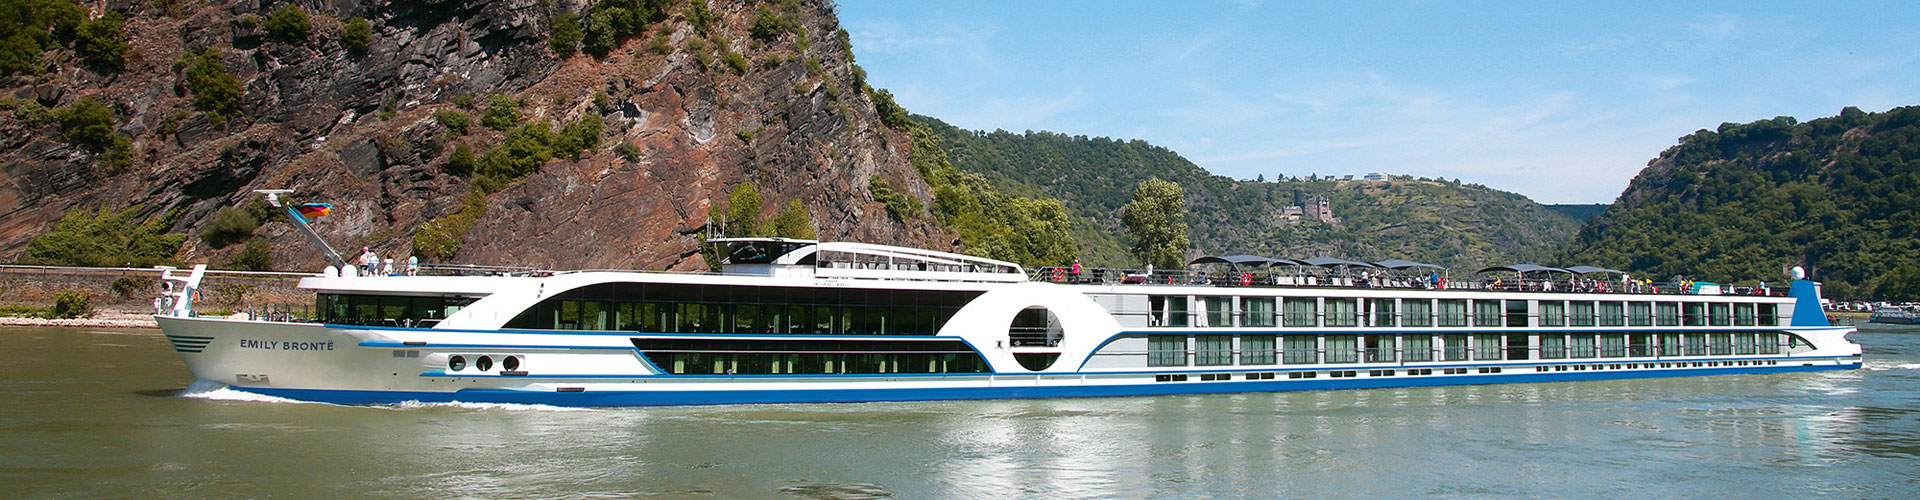 Riviera Travel River Cruises